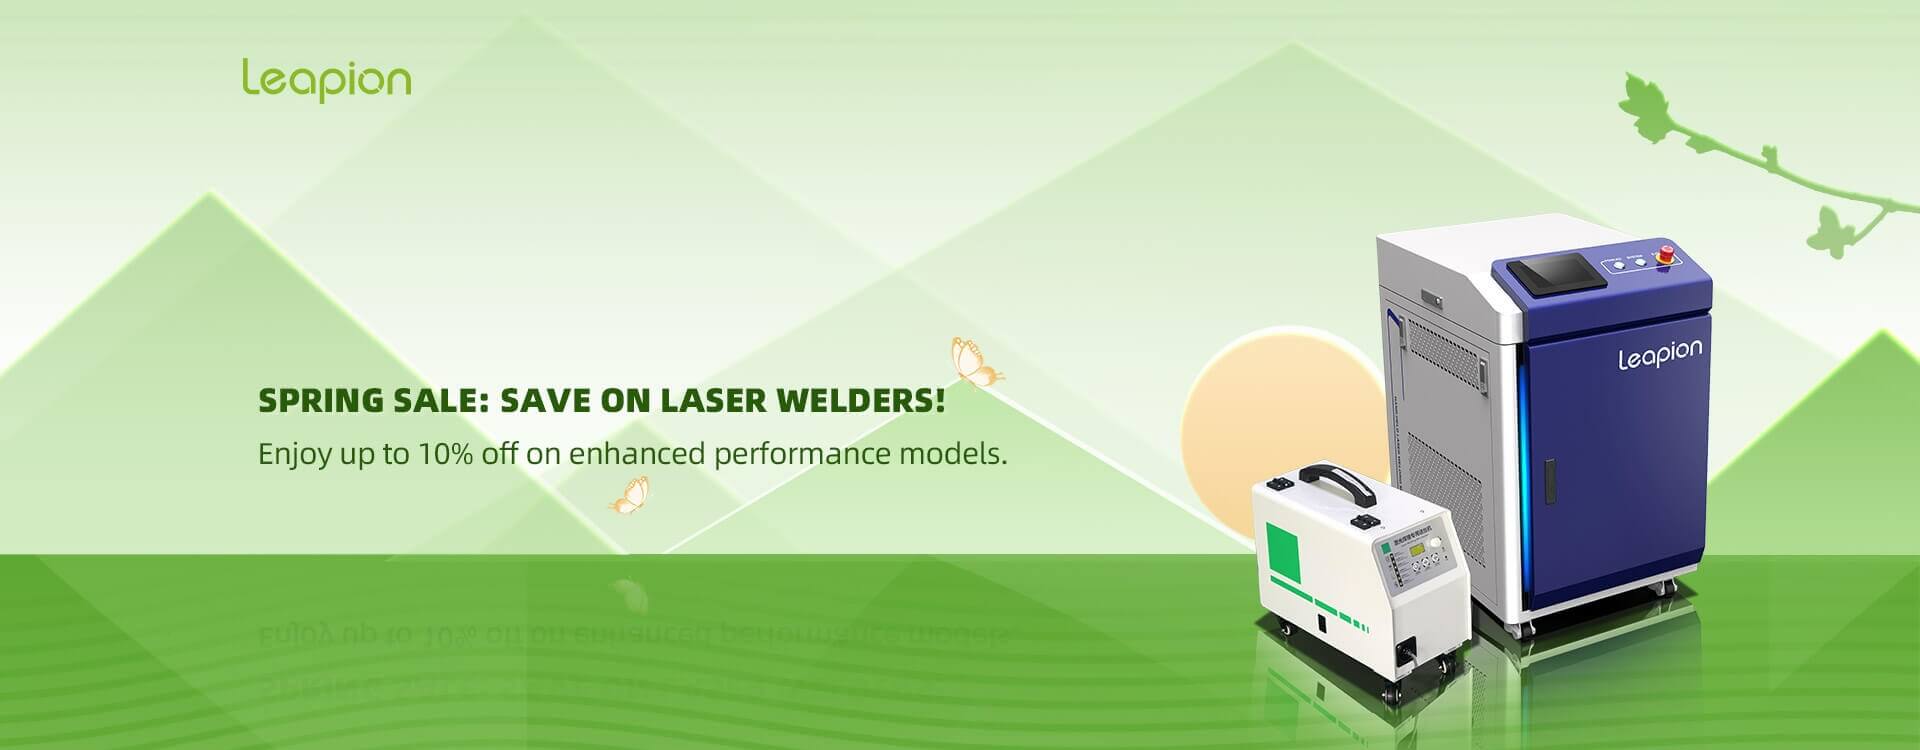 leapion laser welding machine